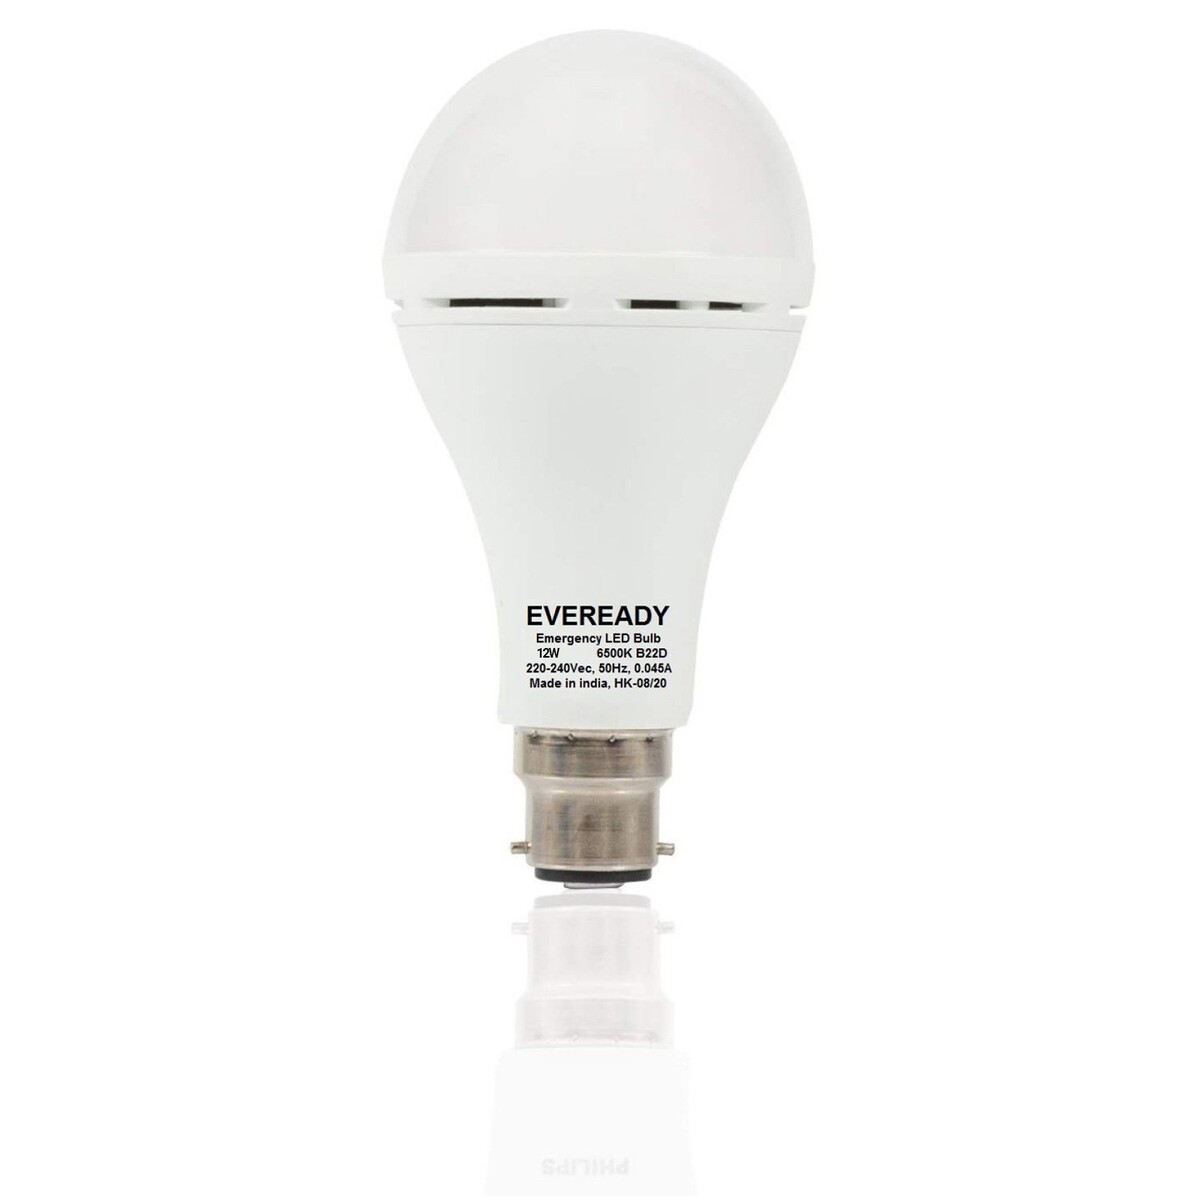 Eveready LED EME Bulb 12W